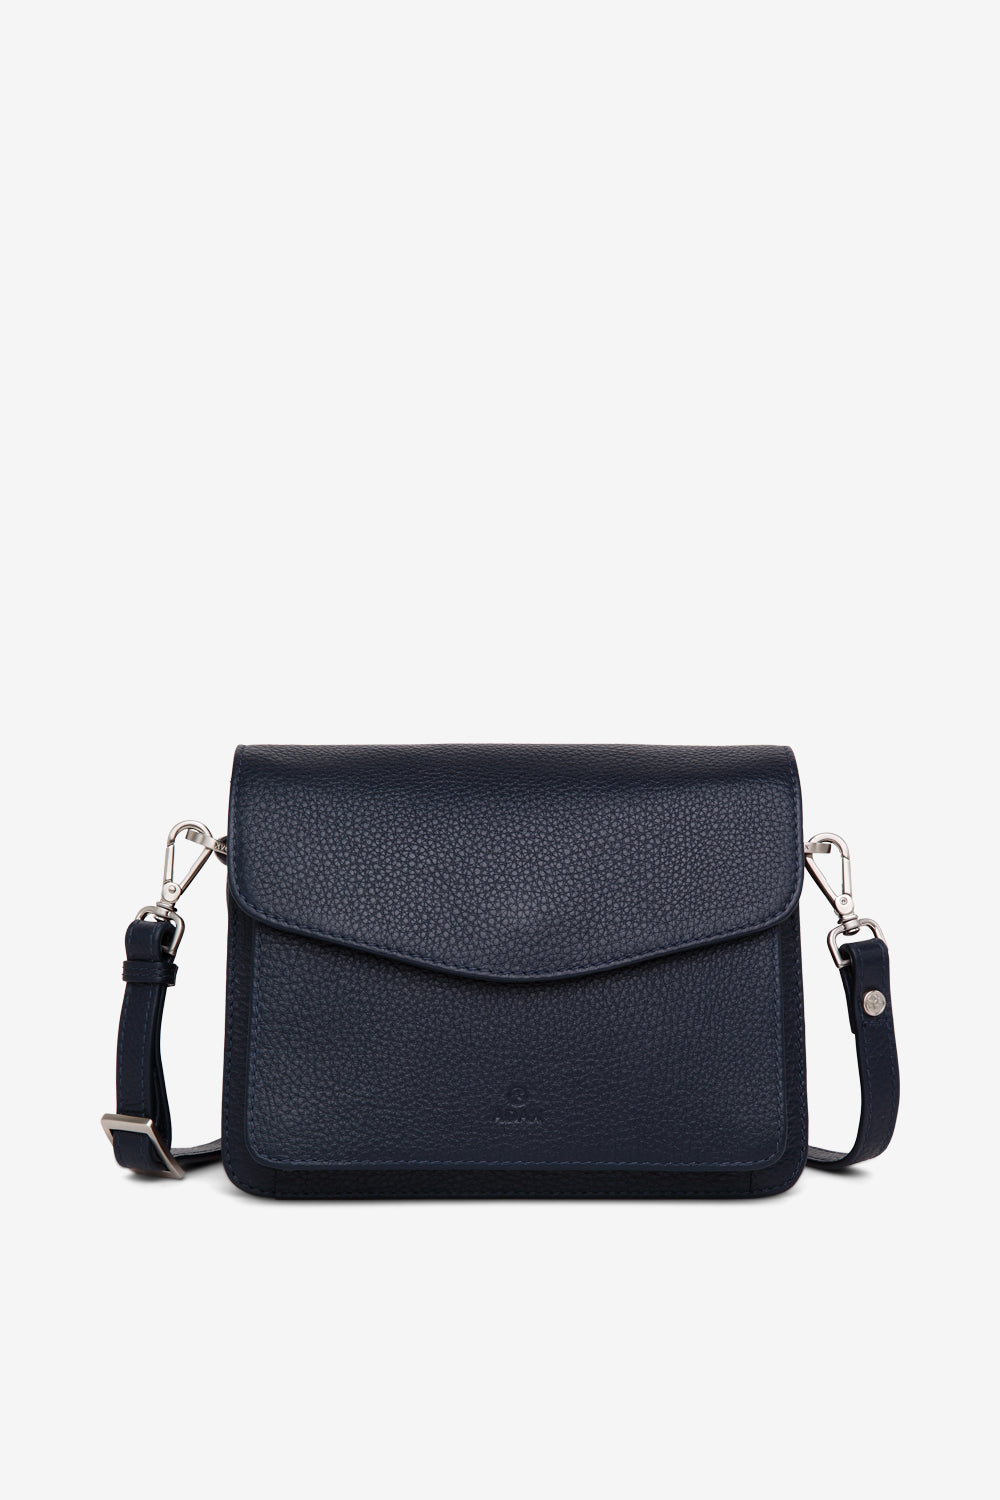 Shoulder bags for women – when fashion meets function – Adax Shop